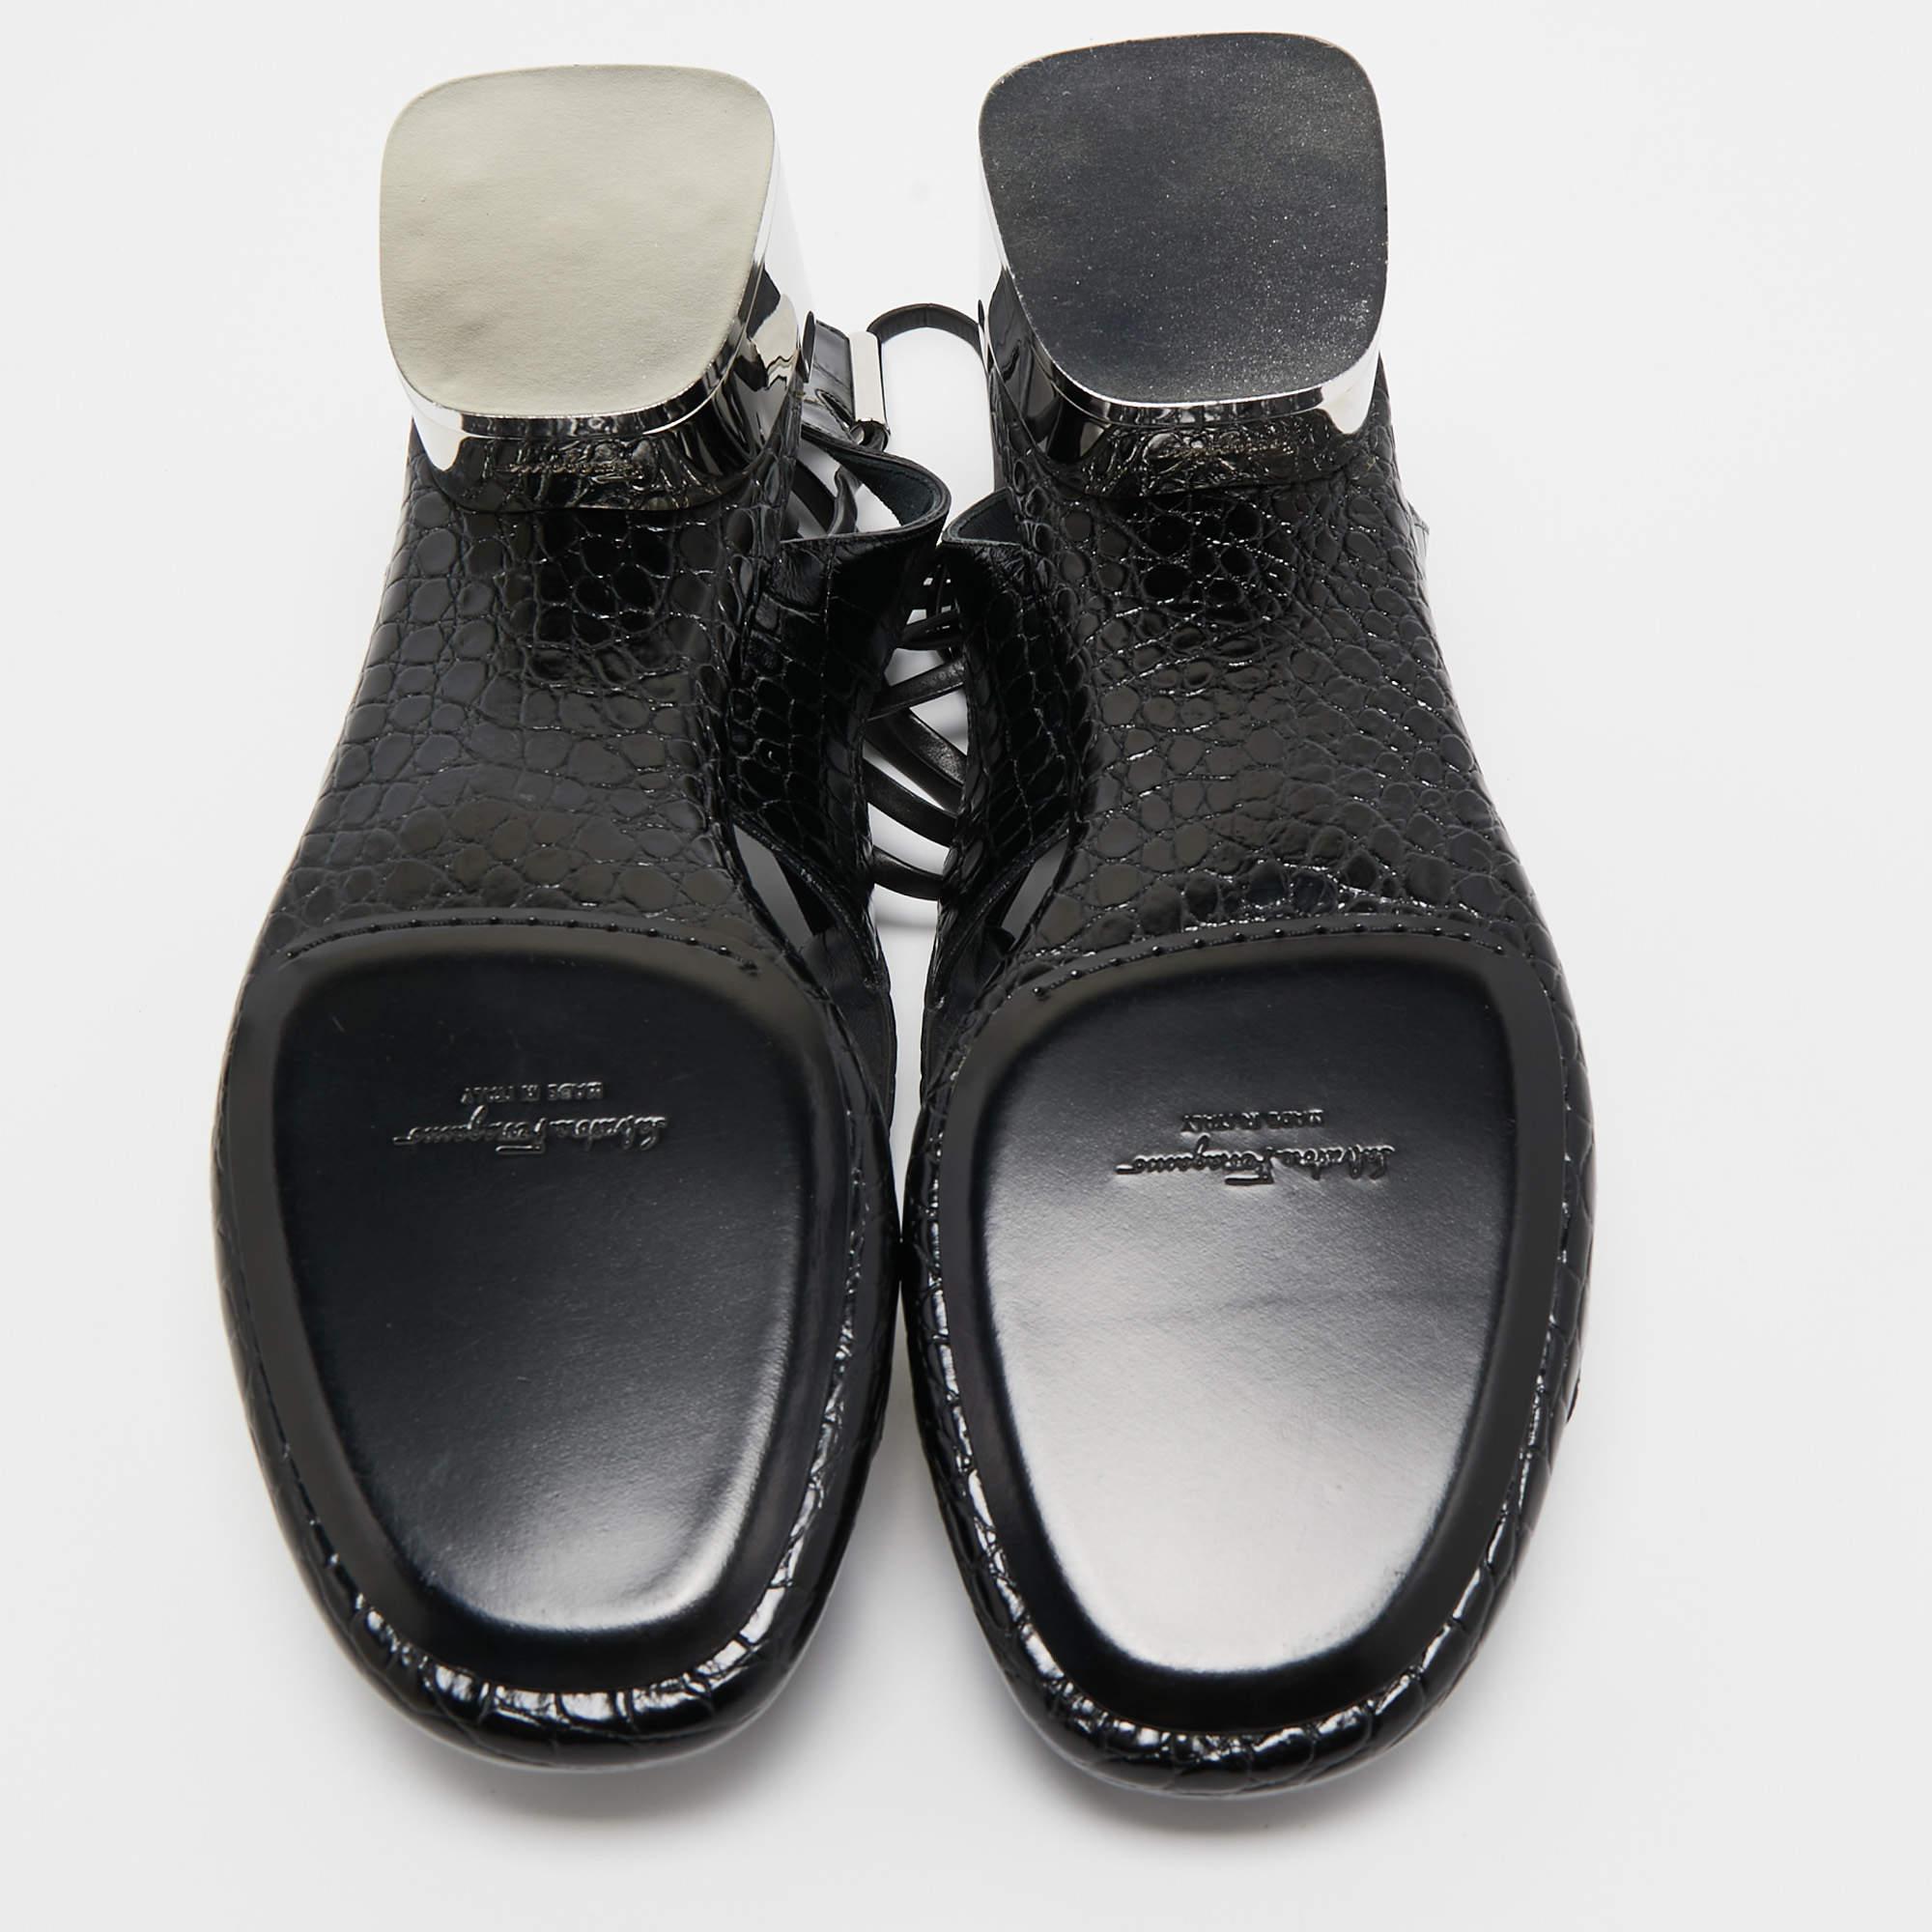 Salvatore Ferragamo Black Croc Embossed Leather Glorja Ankle Wrap Sandals Size 3 For Sale 2